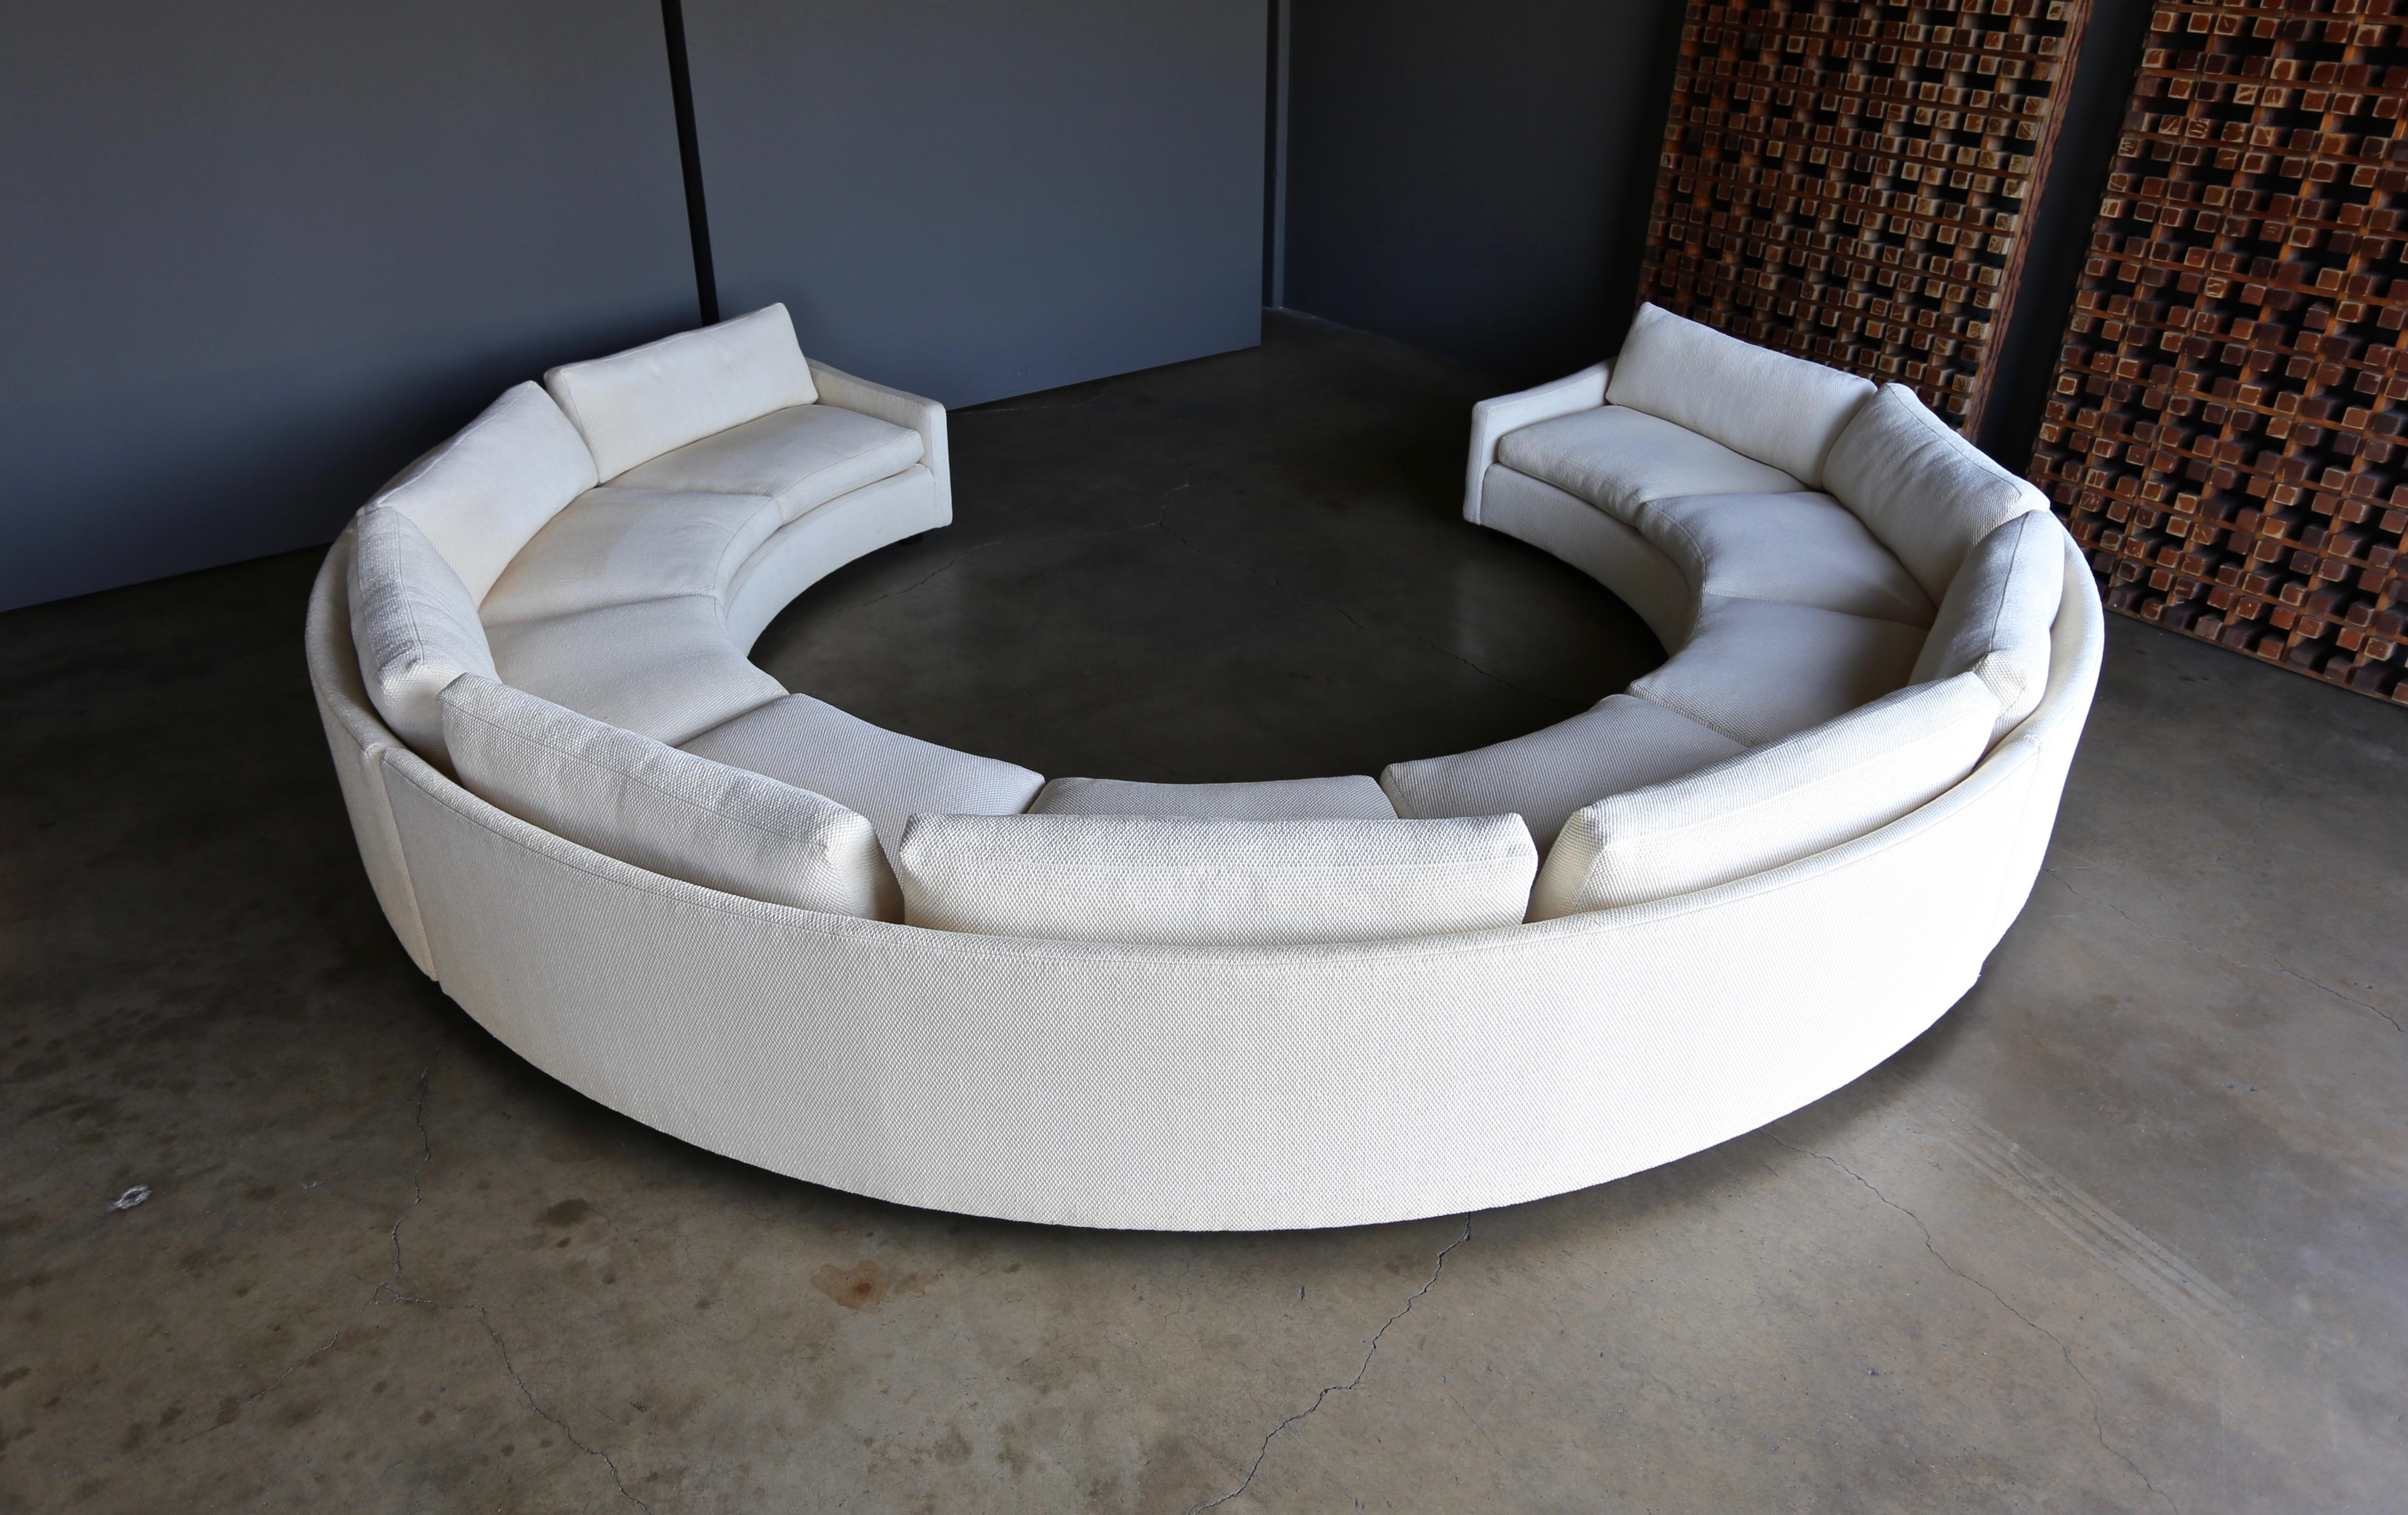 Milo Baughman circular sectional sofa for Thayer Coggin, circa 1975. 

New upholstery recommended.